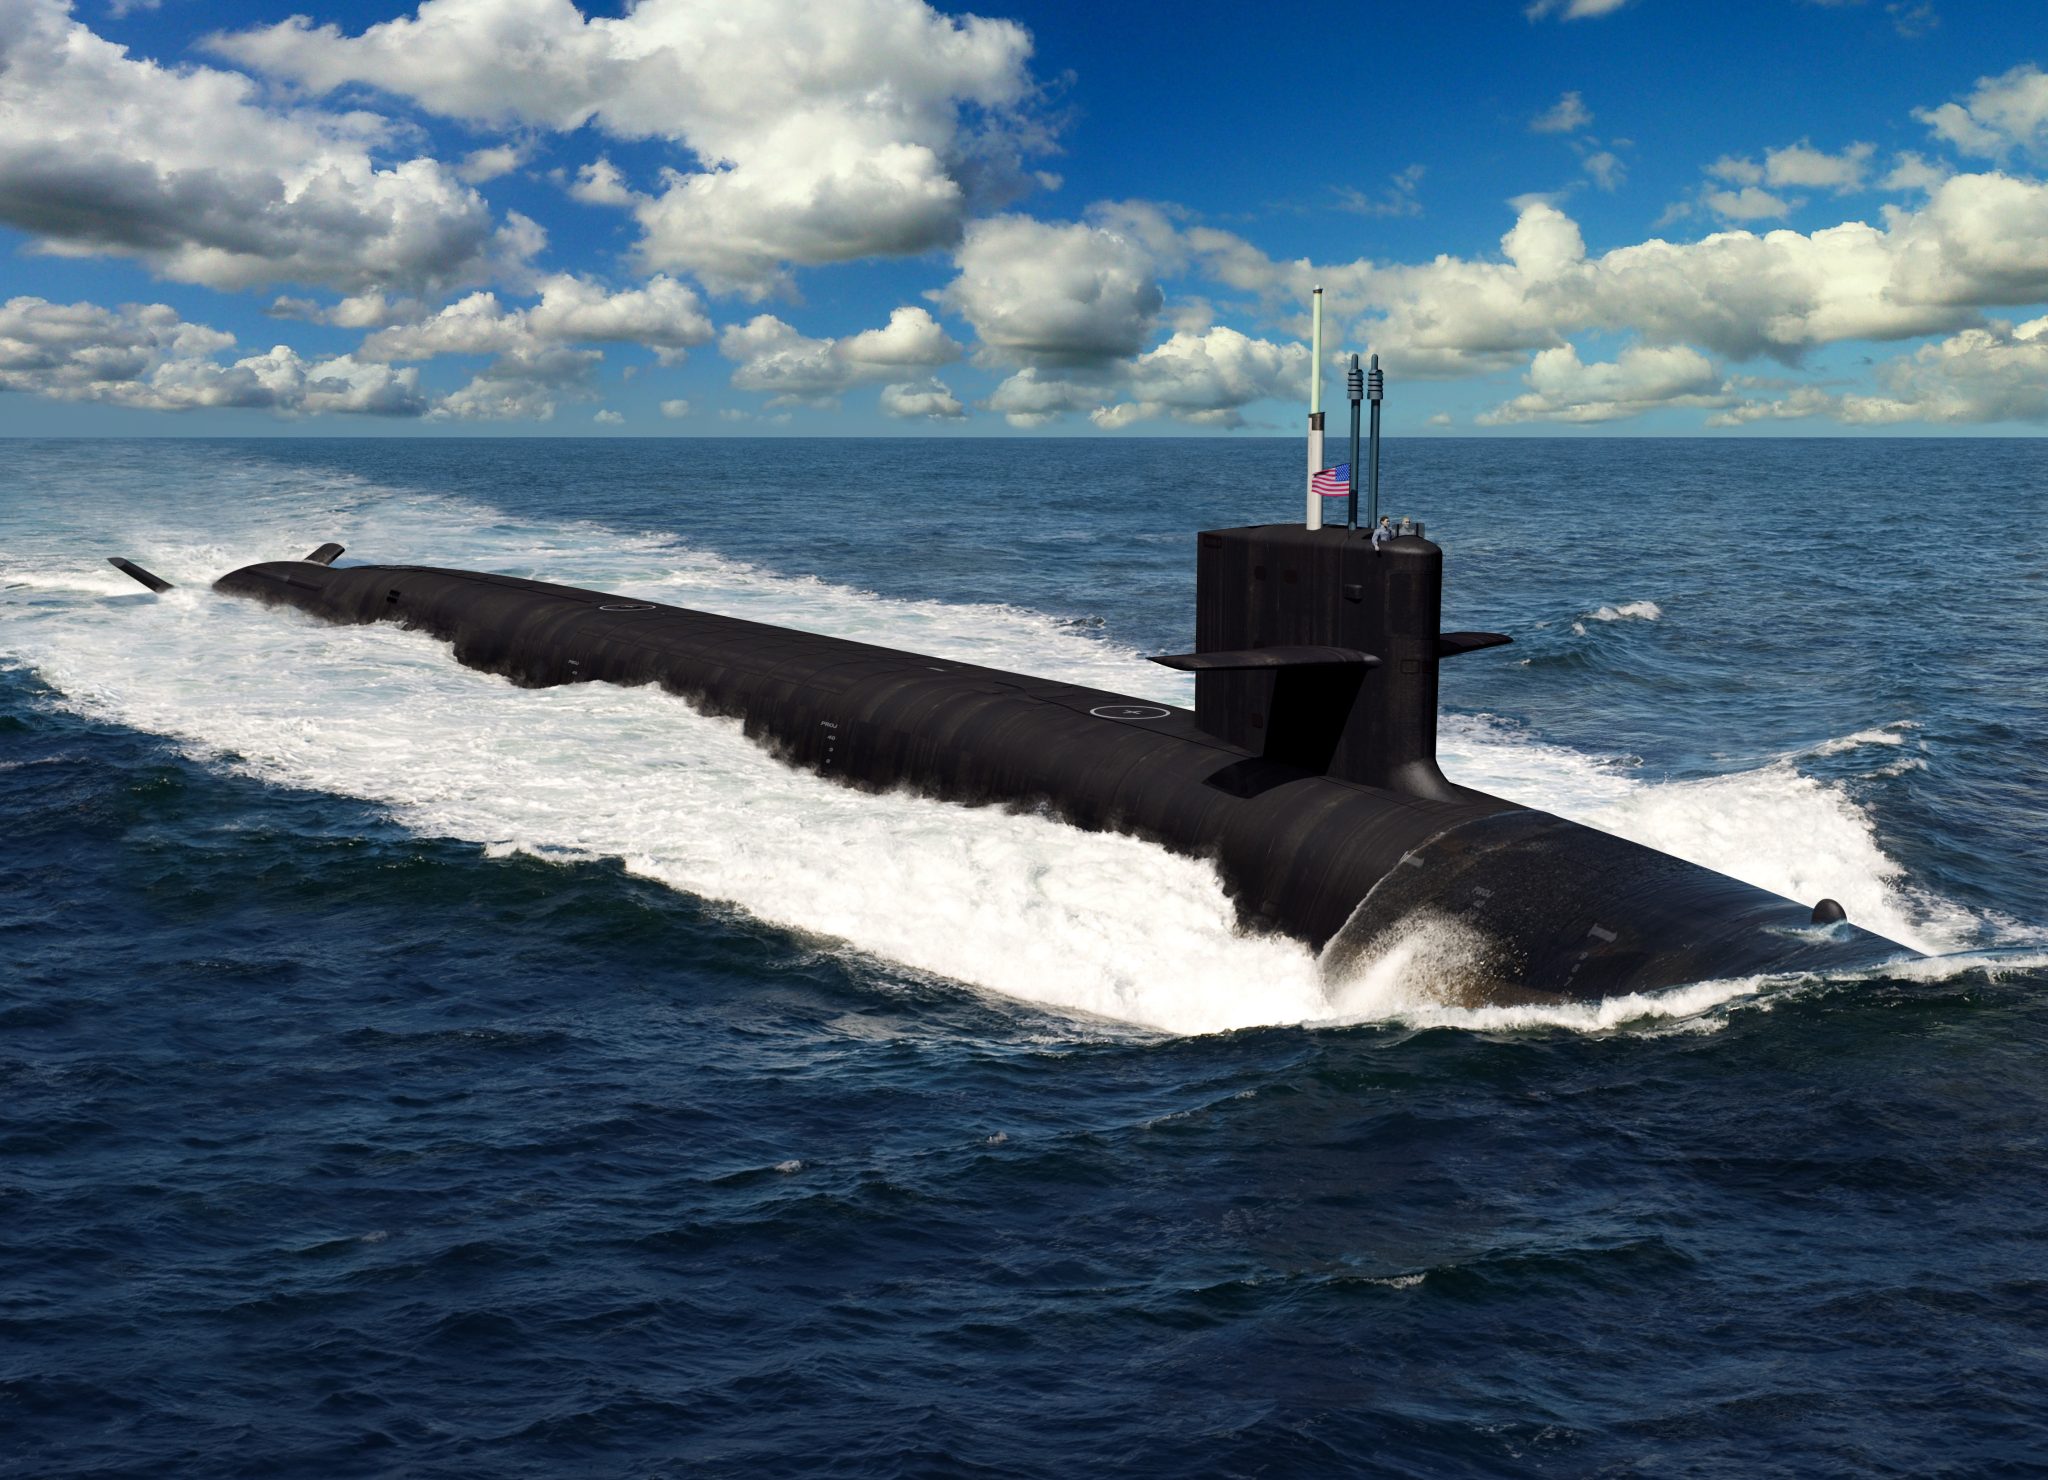 Leonardo DRS Awarded Contracts Valued at Over $3 Billion for U.S. Navy’s Columbia-Class Submarine Program